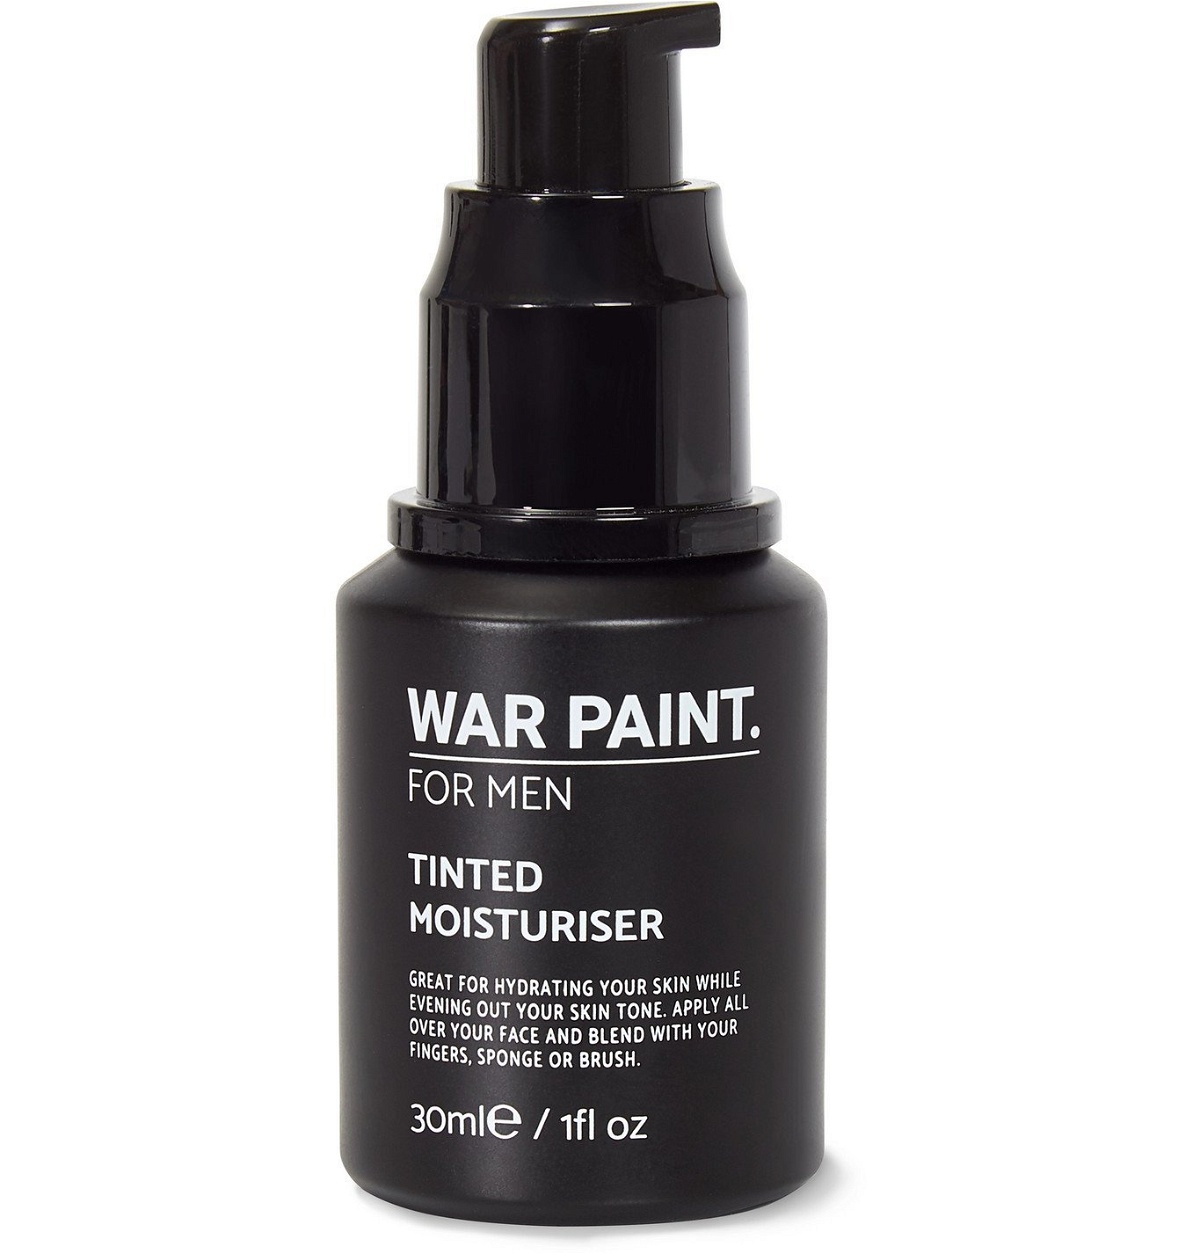 Photo: War Paint for Men - Tinted Moisturiser - Tan, 30ml - Colorless